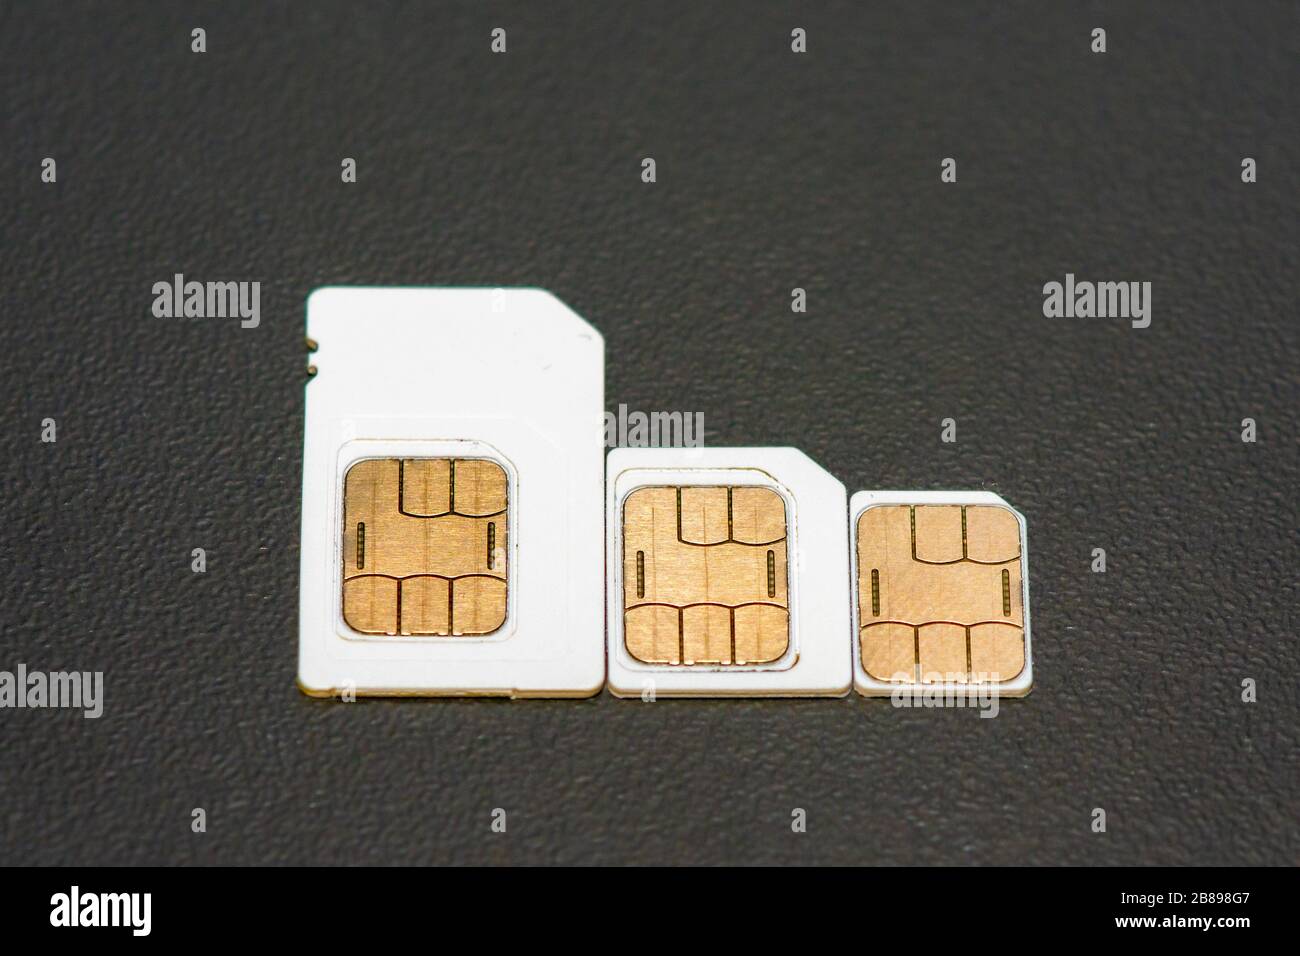 Mini, micro, nano blank sim card for international use. Stock Photo